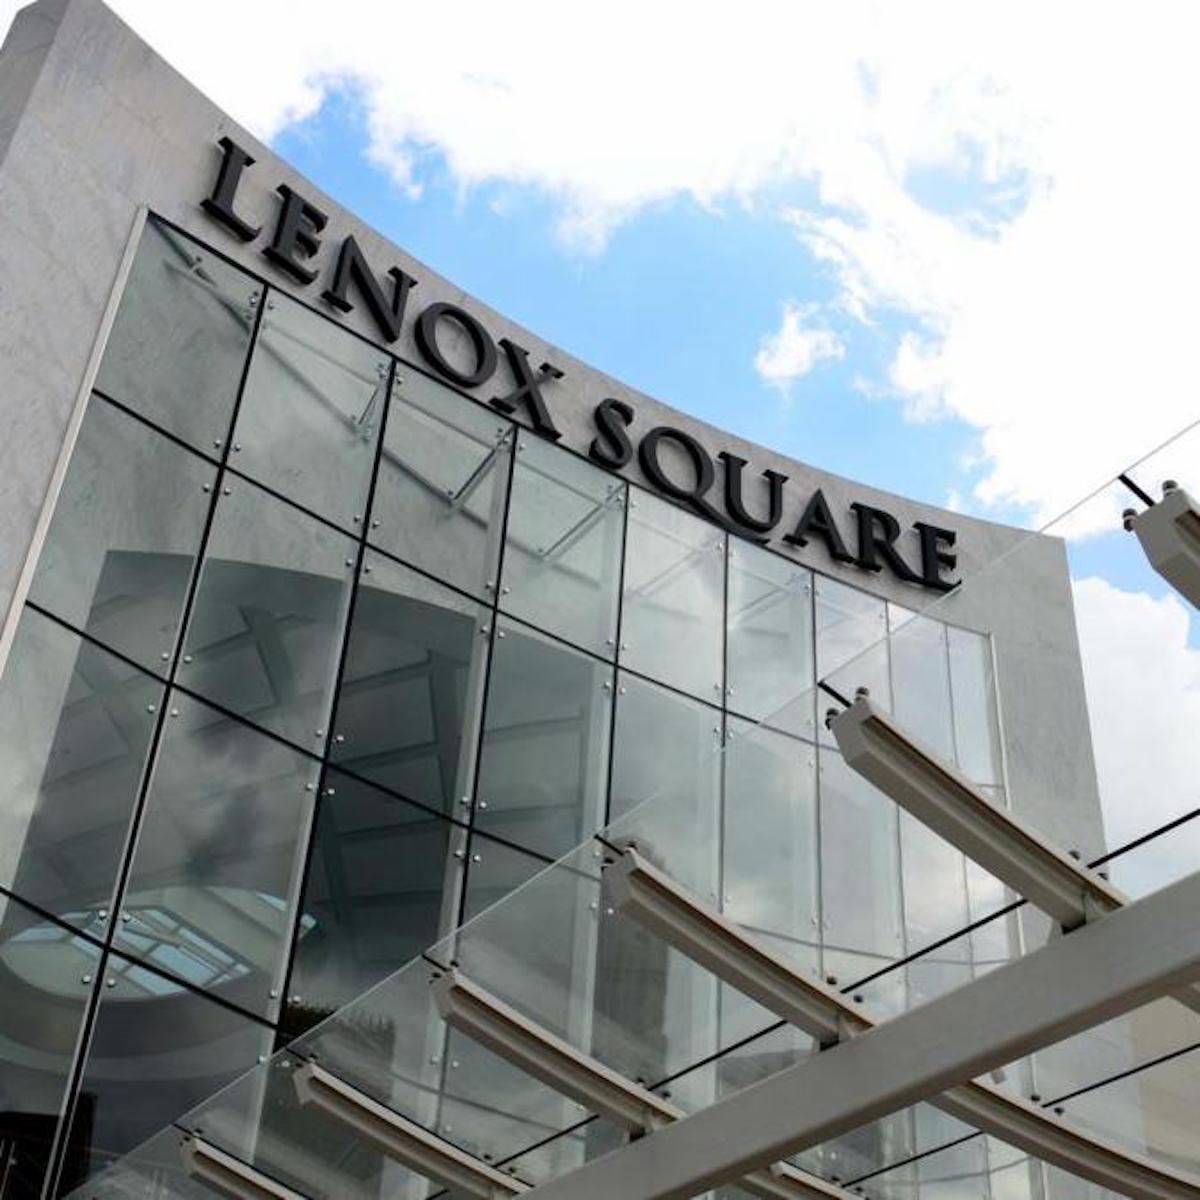 lenox mall ugg store